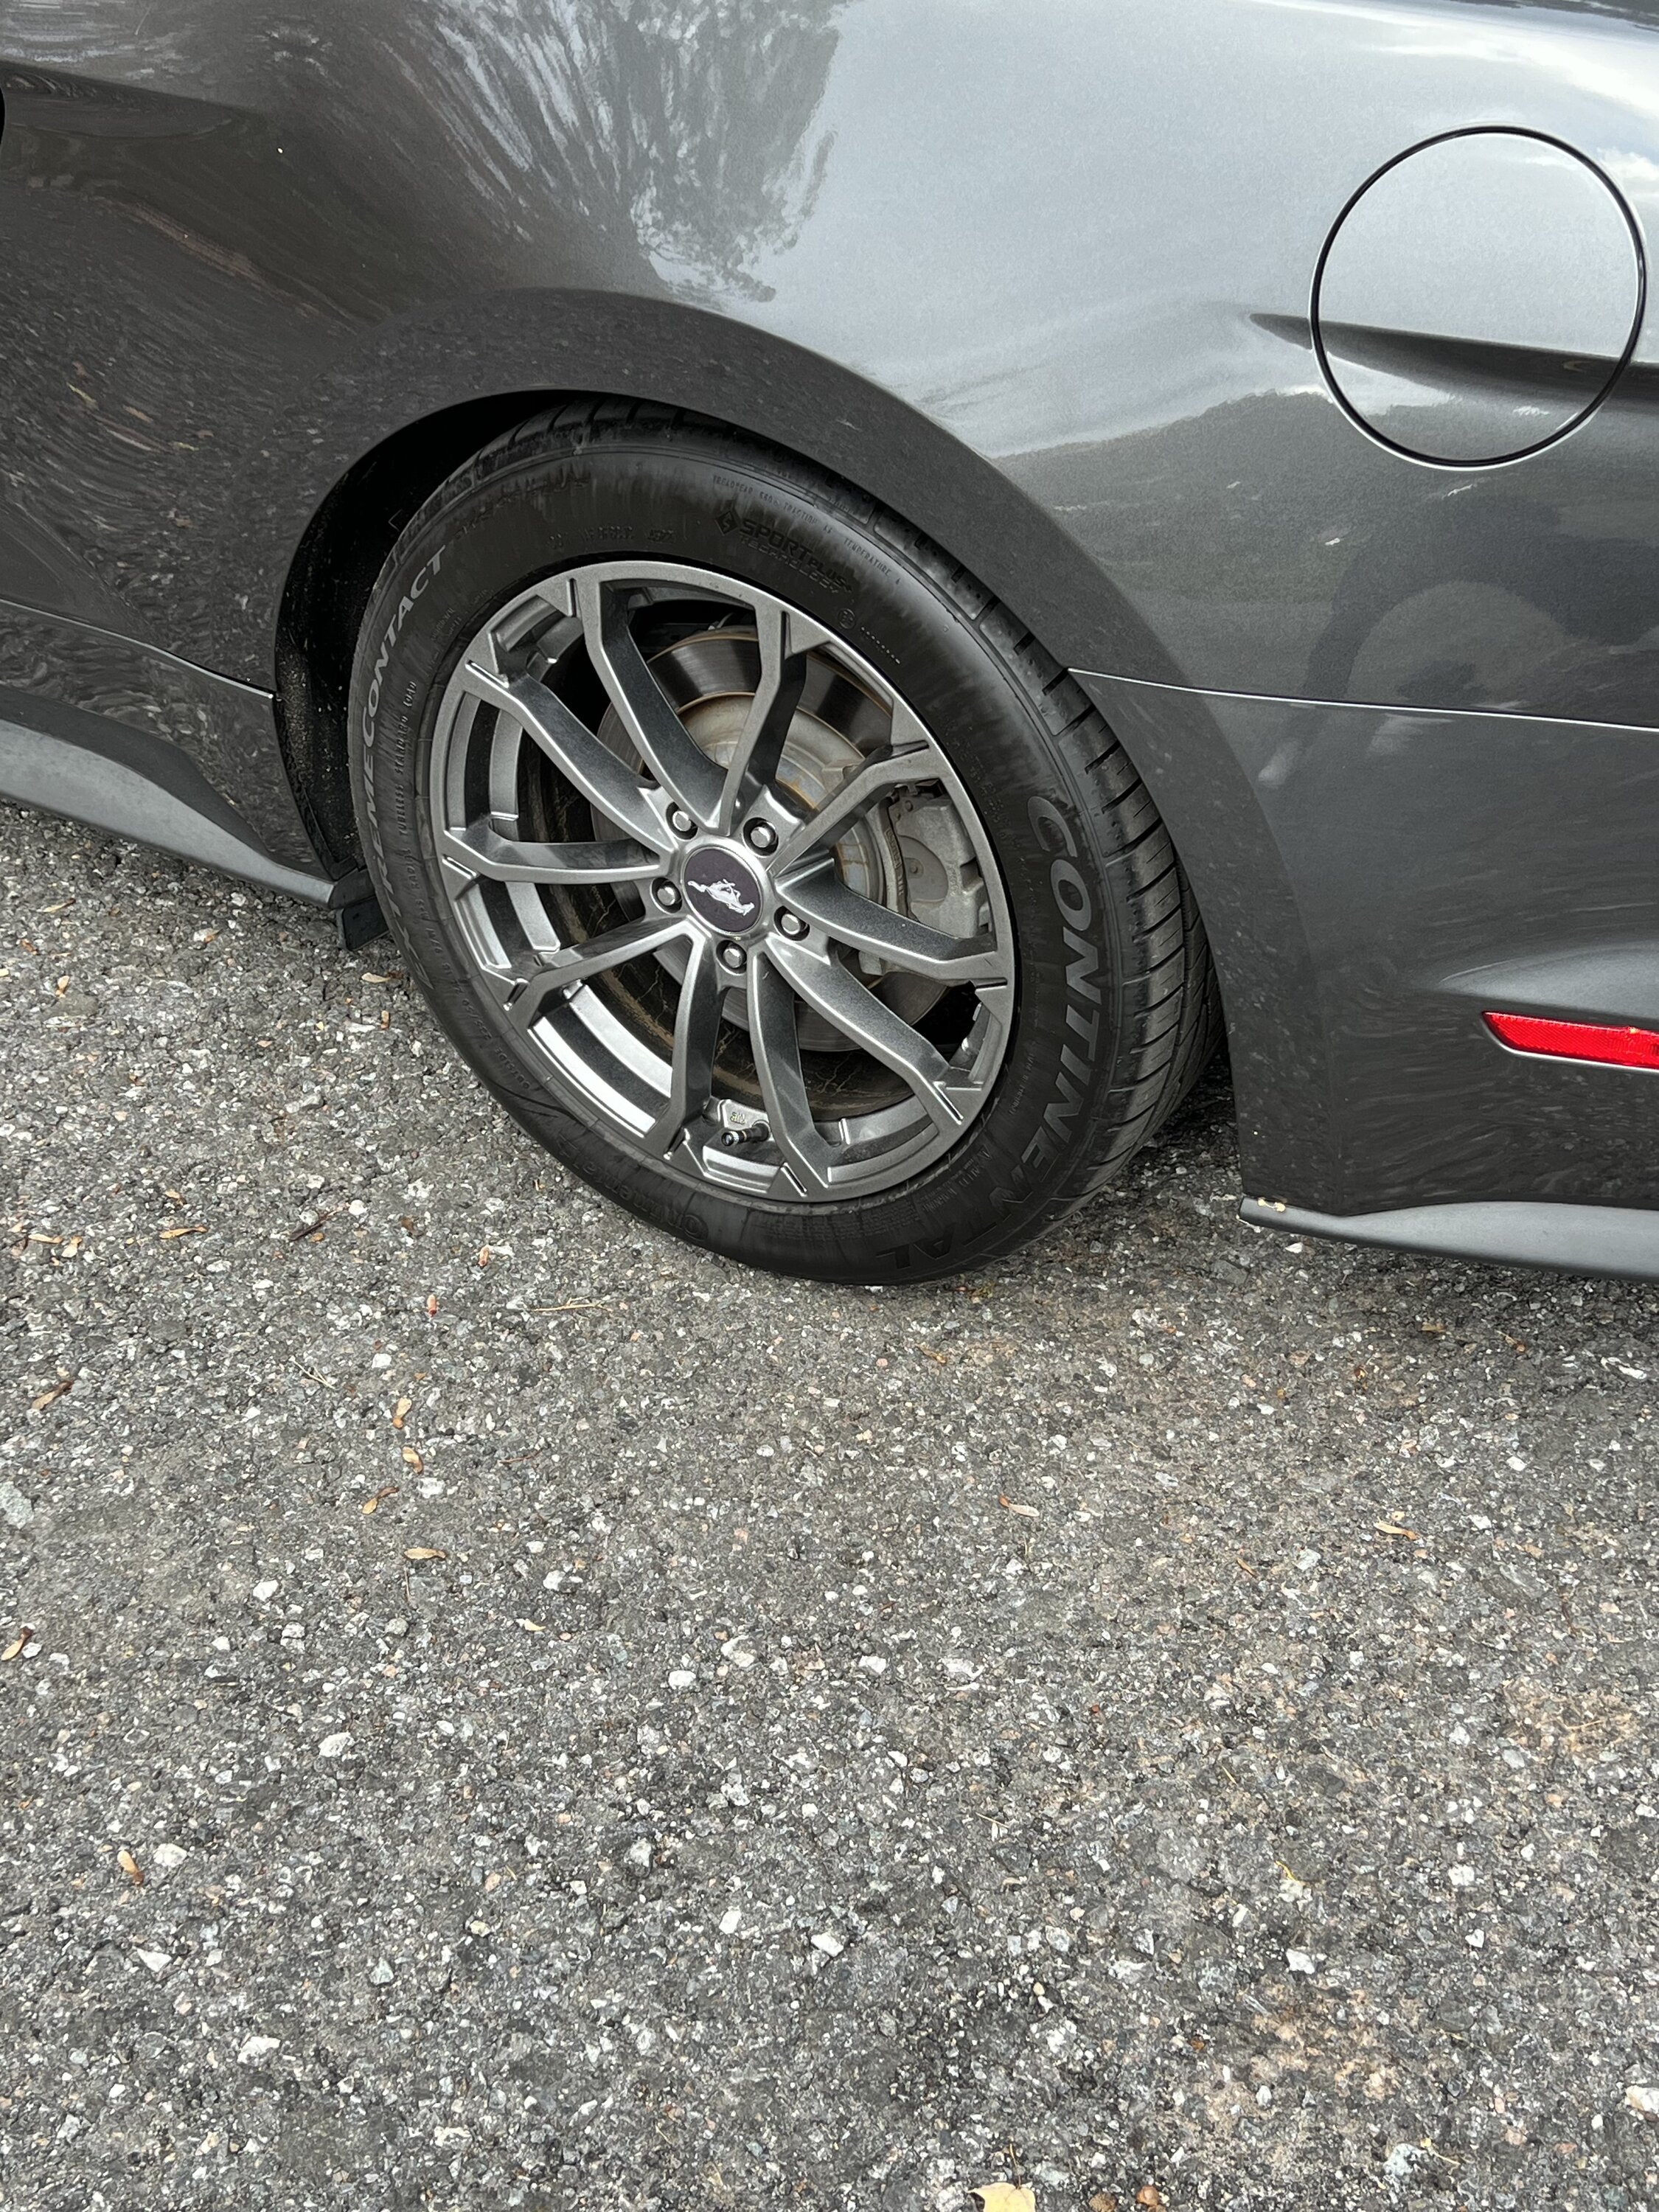 2018 Ford Mustang Wheel-Larger Tire.jpg